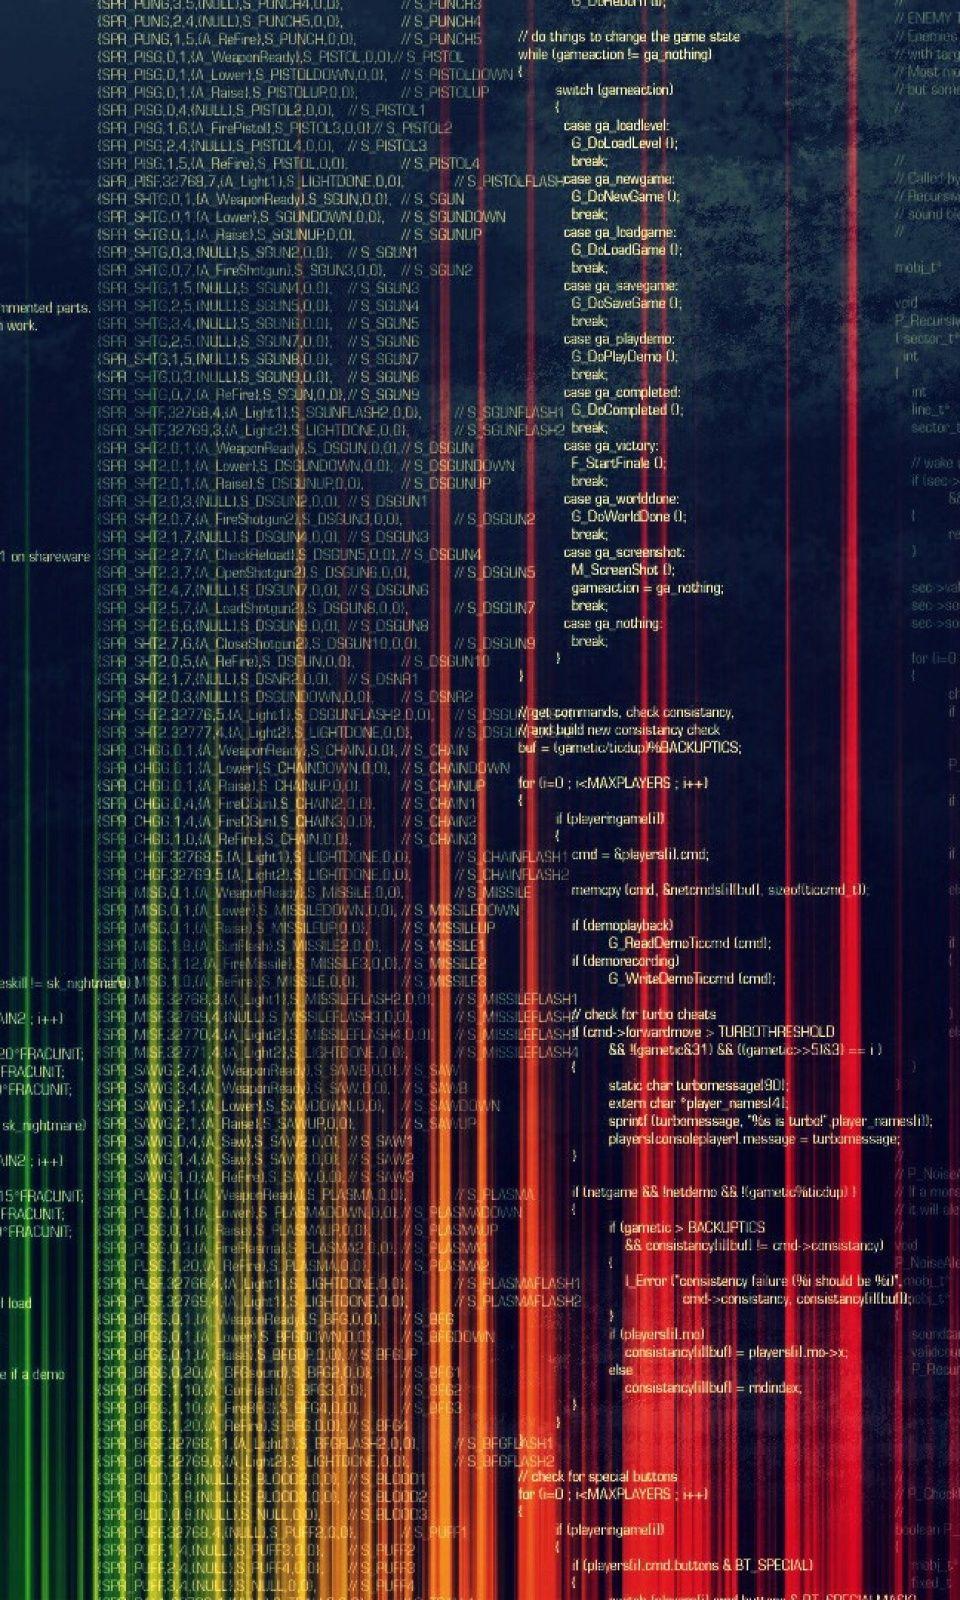 Programming Code Mobile Wallpaper